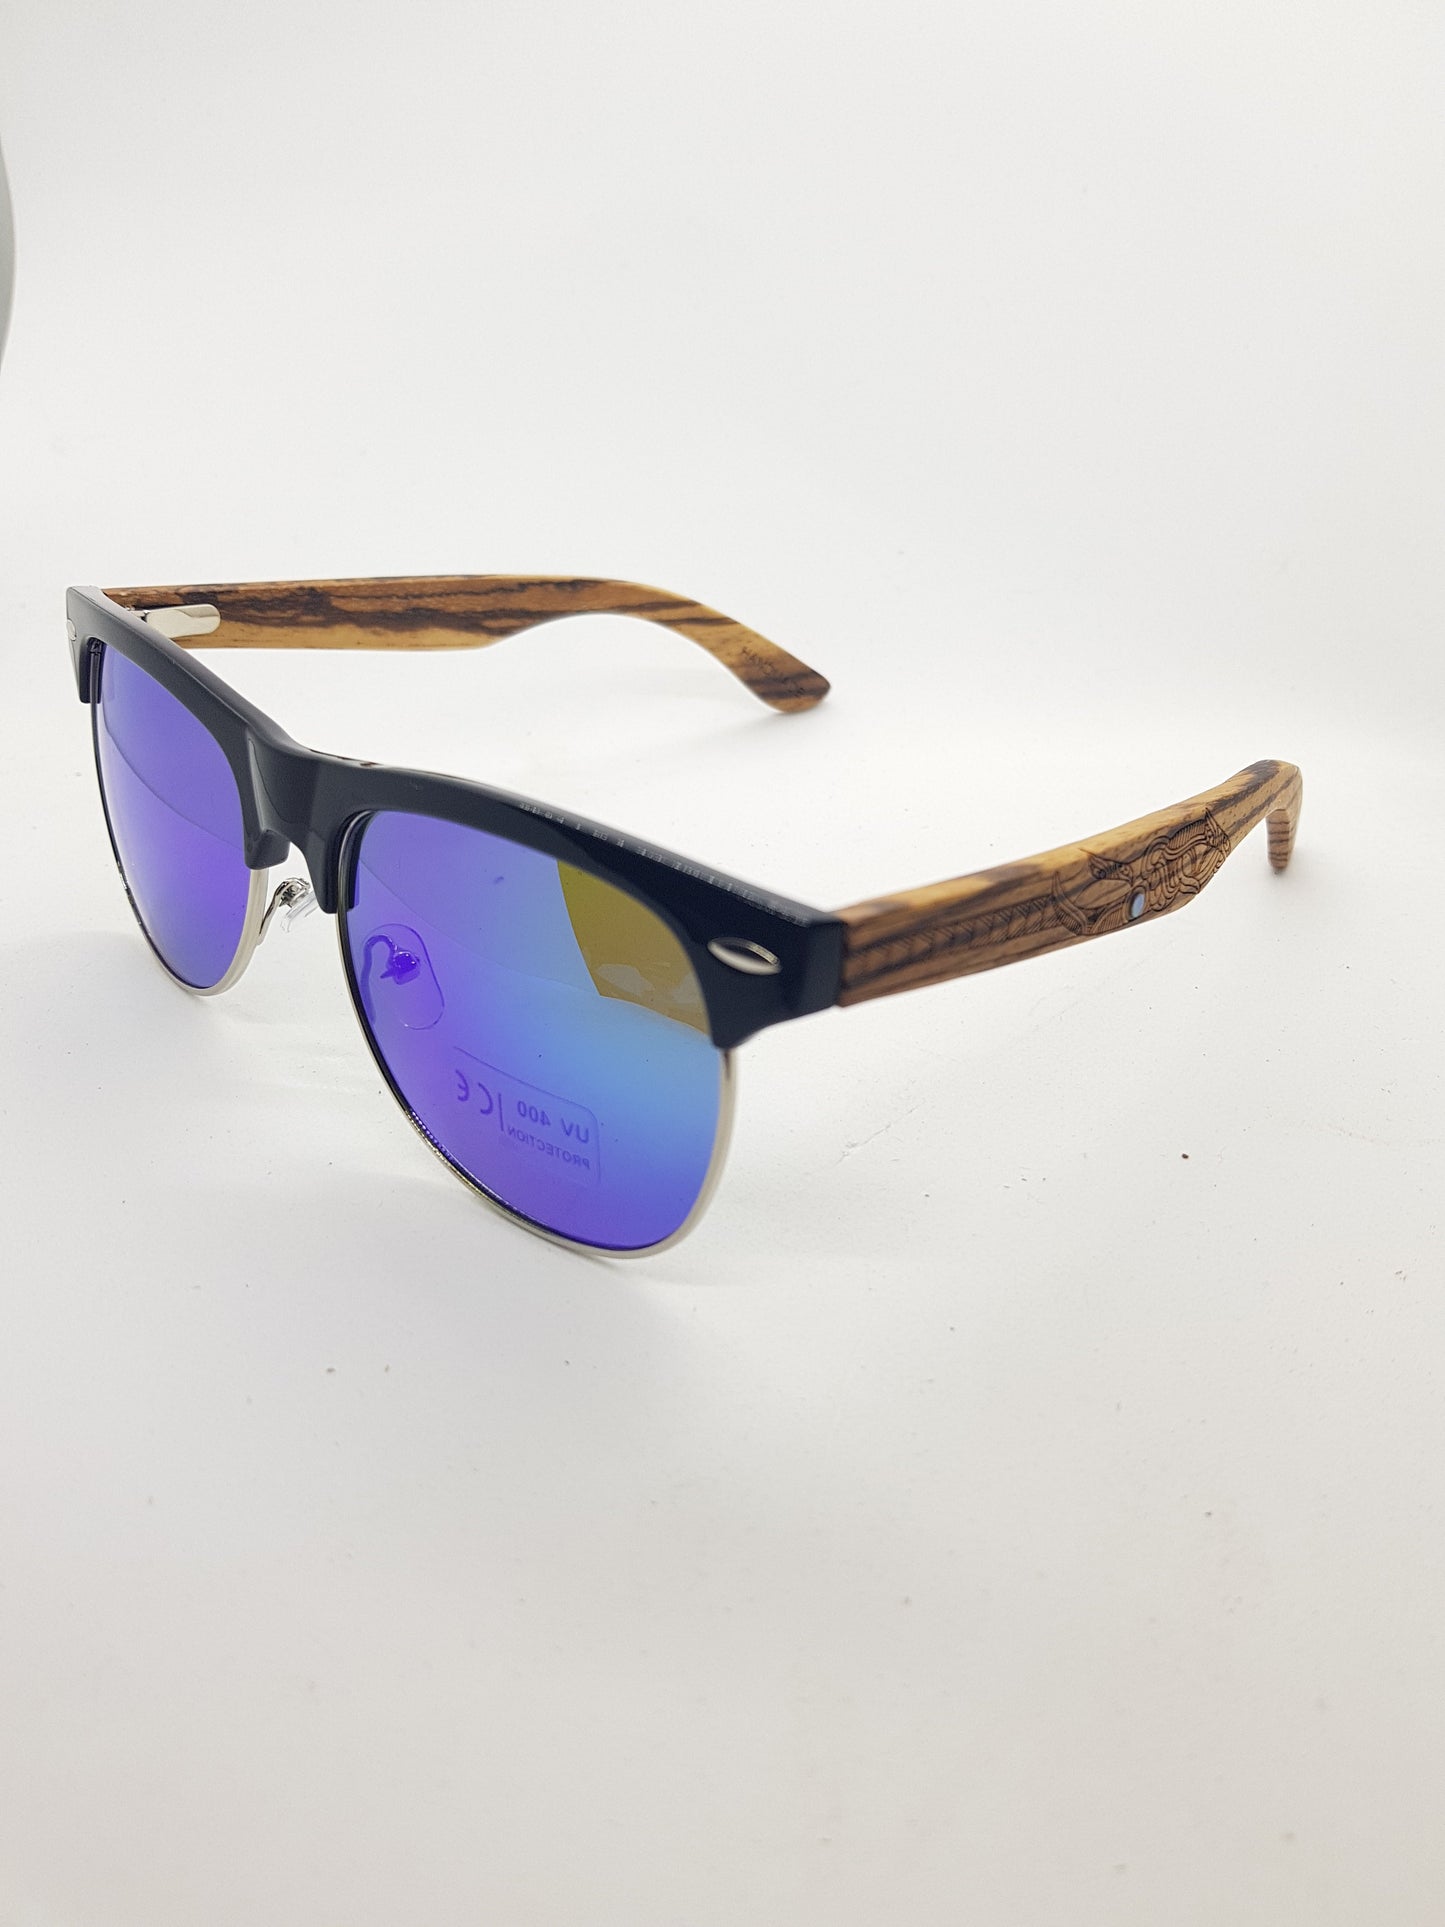 Kaitiaki Unisex Wooden sunglasses by L.Eyes Eyewear with Maori designs and paua shell